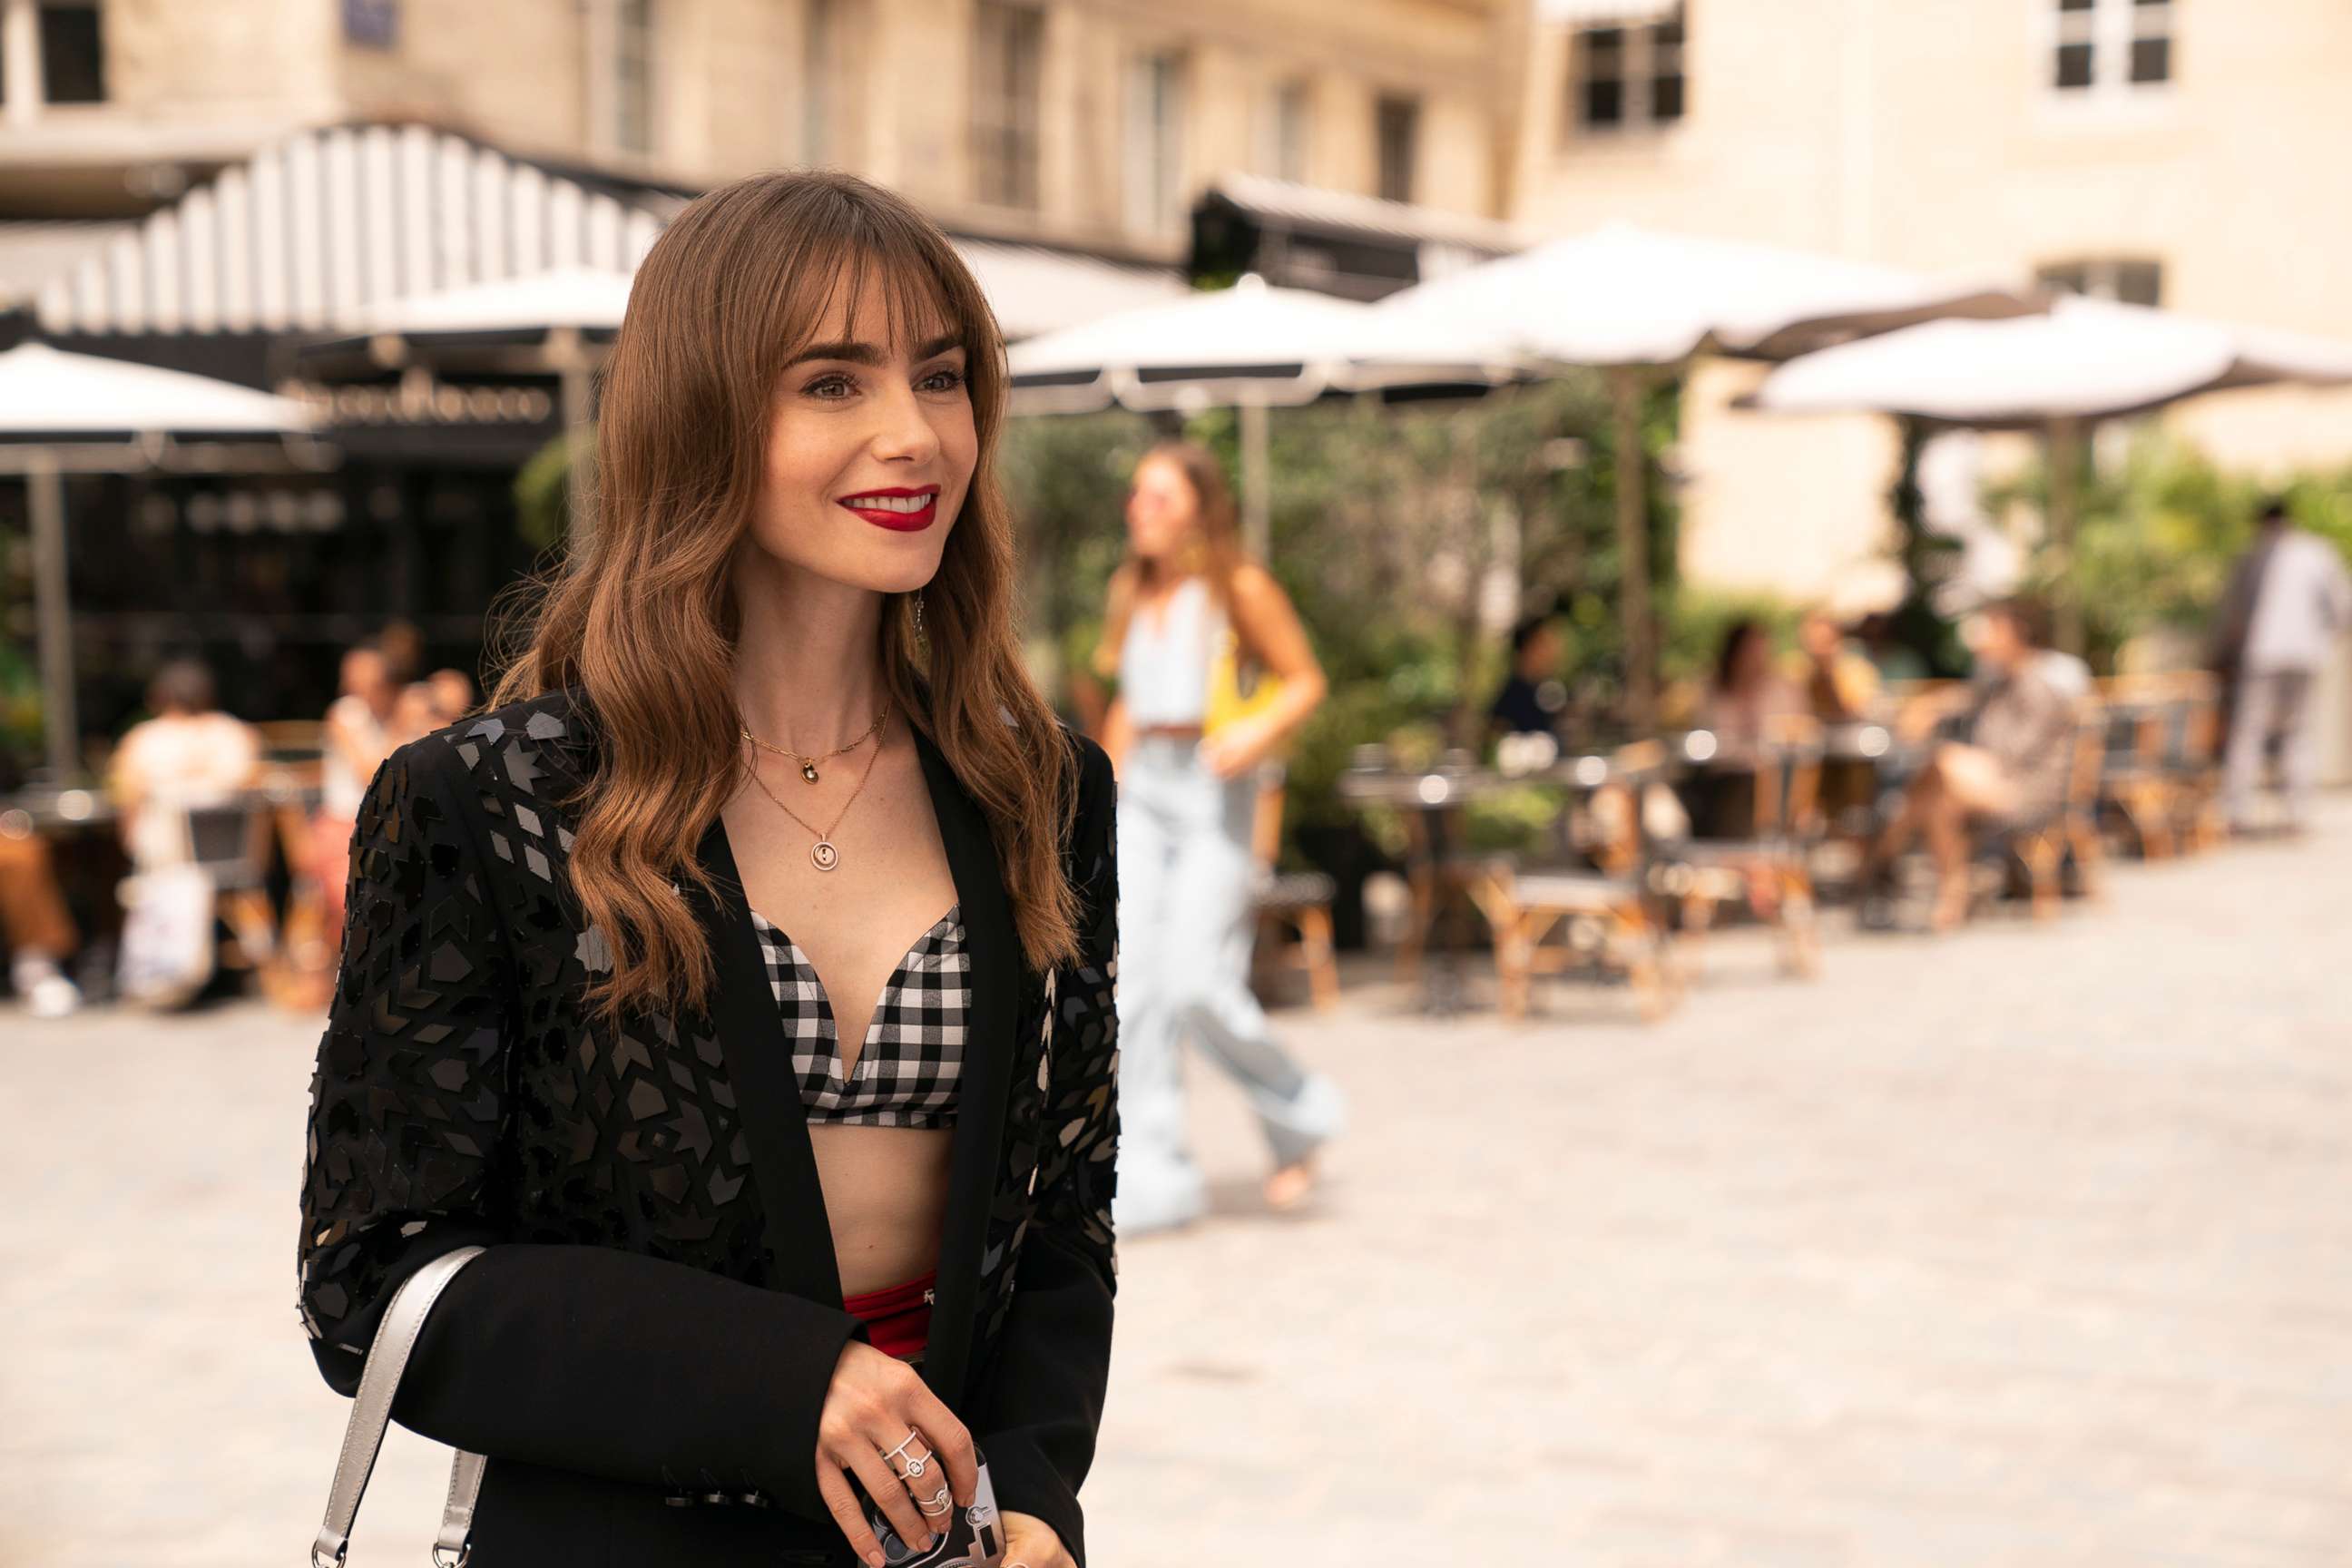 Emily in Paris season 3 cast, Full list of characters in series